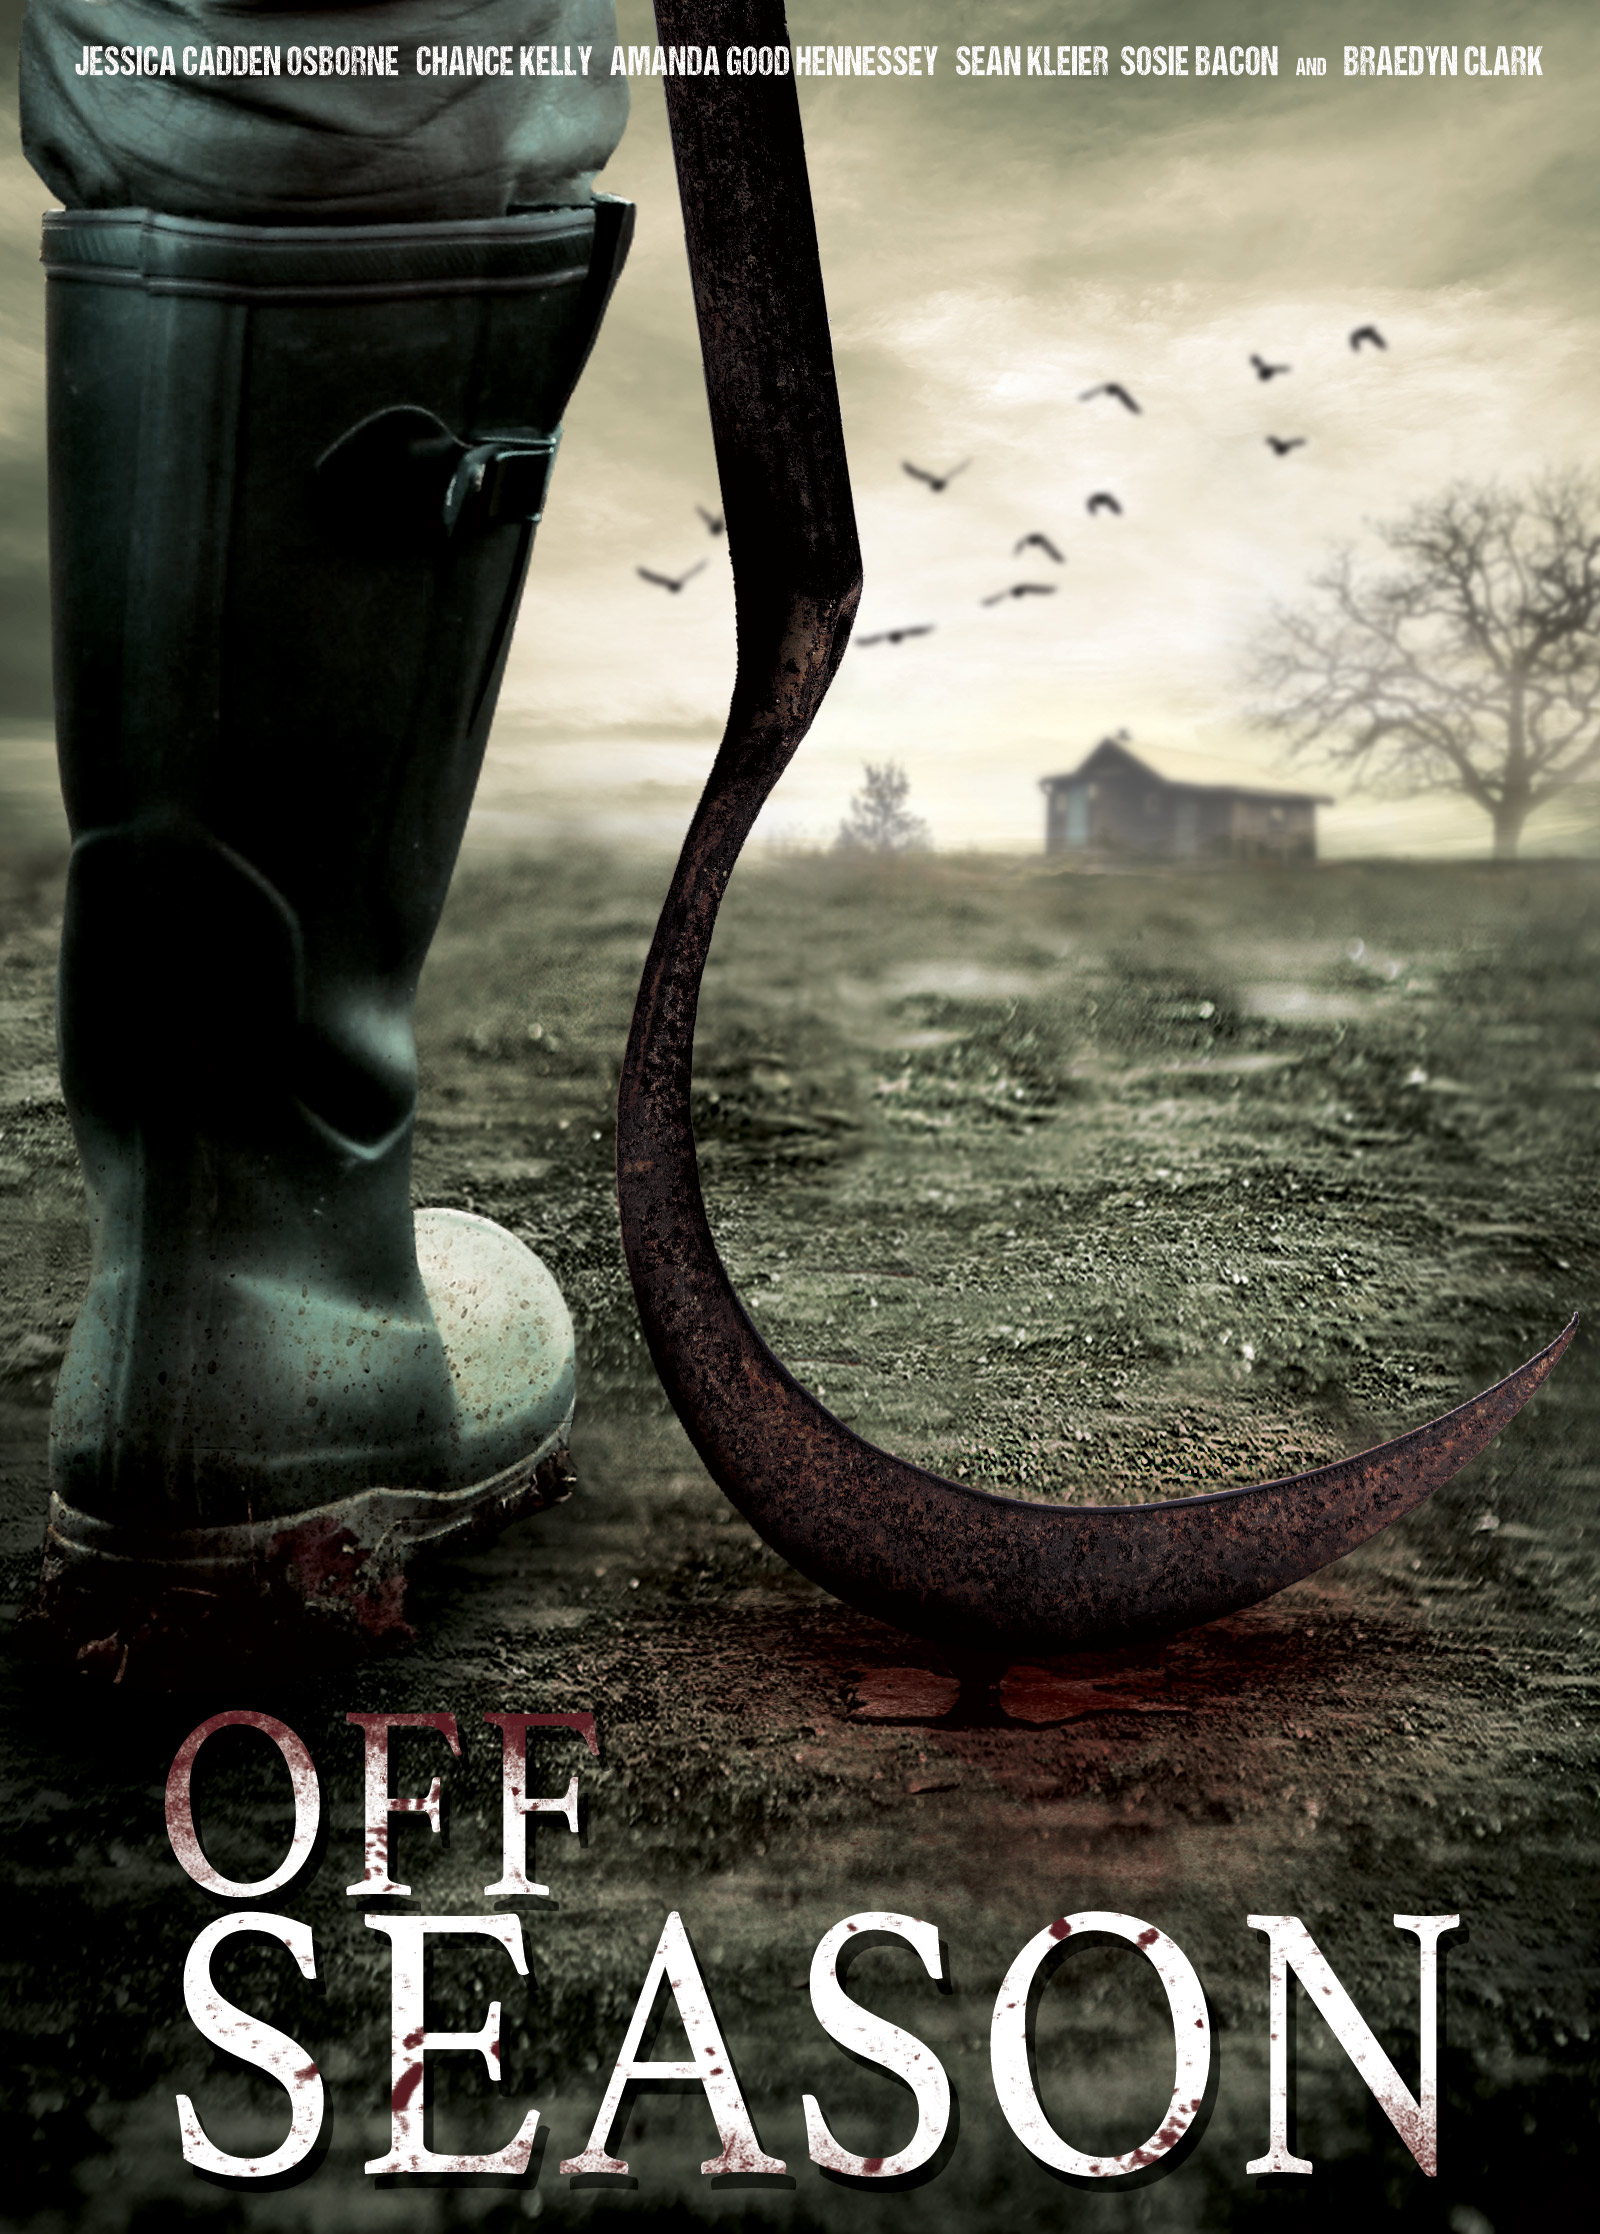 Off Season (2017) starring Jessica Cadden Osborne on DVD on DVD